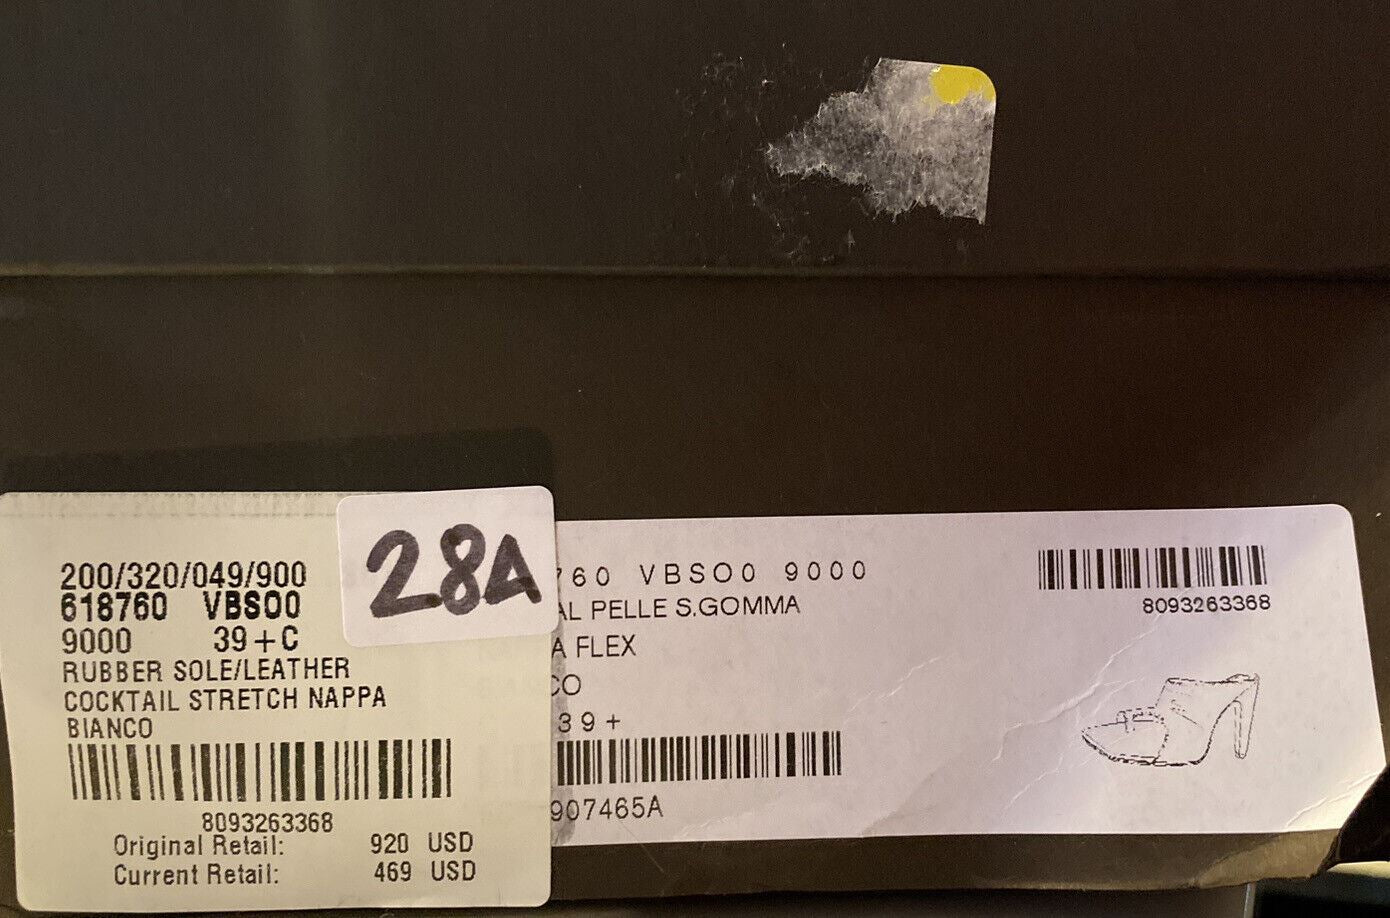 NIB $ 920 Bottega Veneta Ledermules mit hohem Schaft, weiße Schuhe 9,5 US 618760 